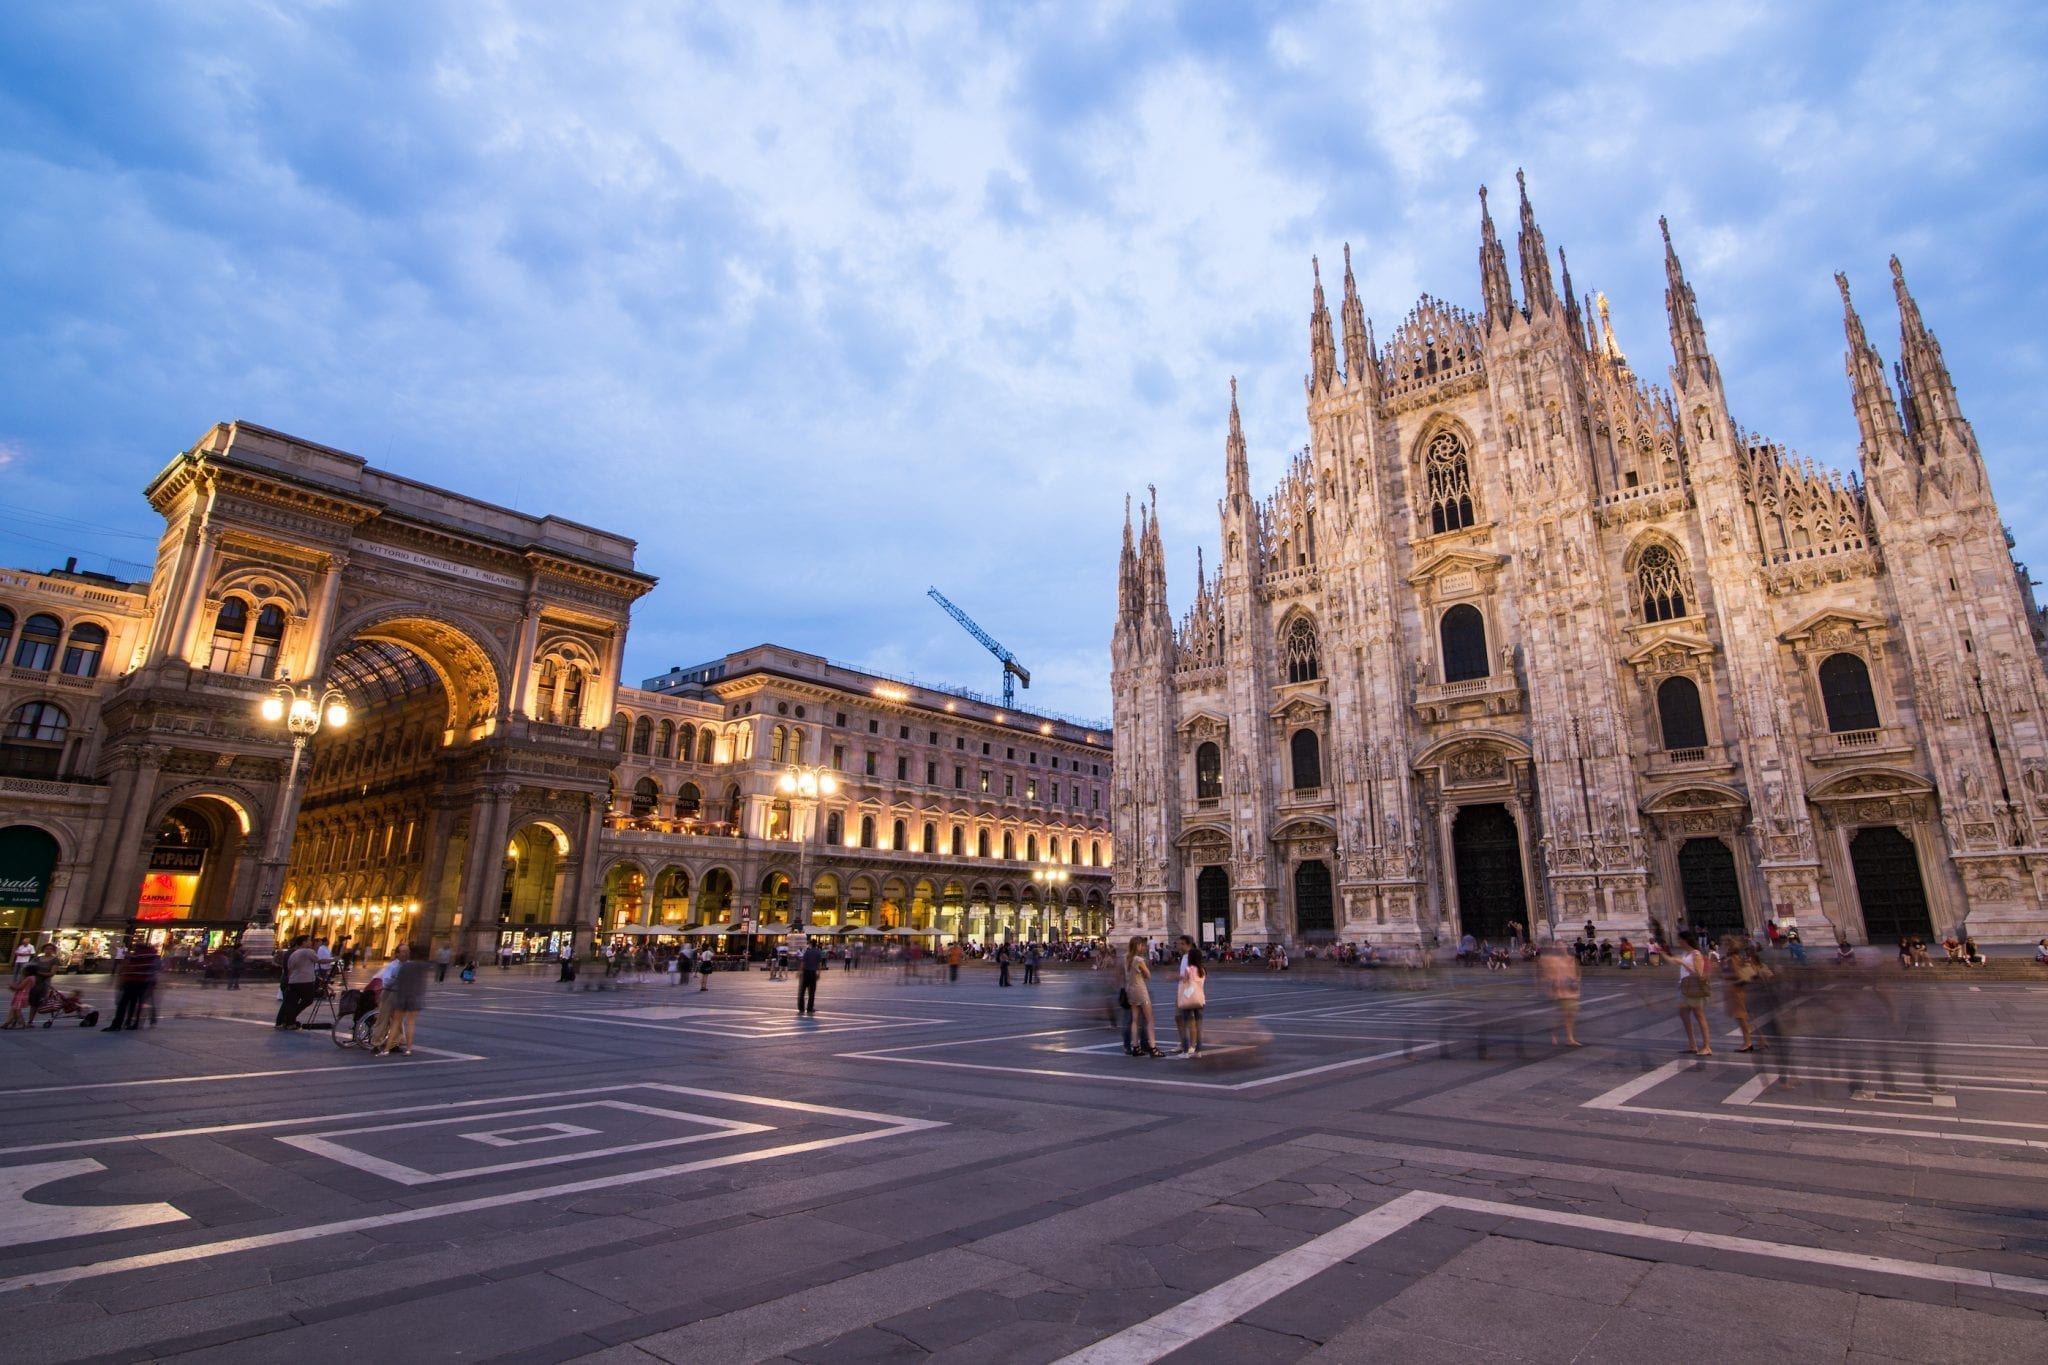 Visiting the Duomo of Milan smittenitaly.co